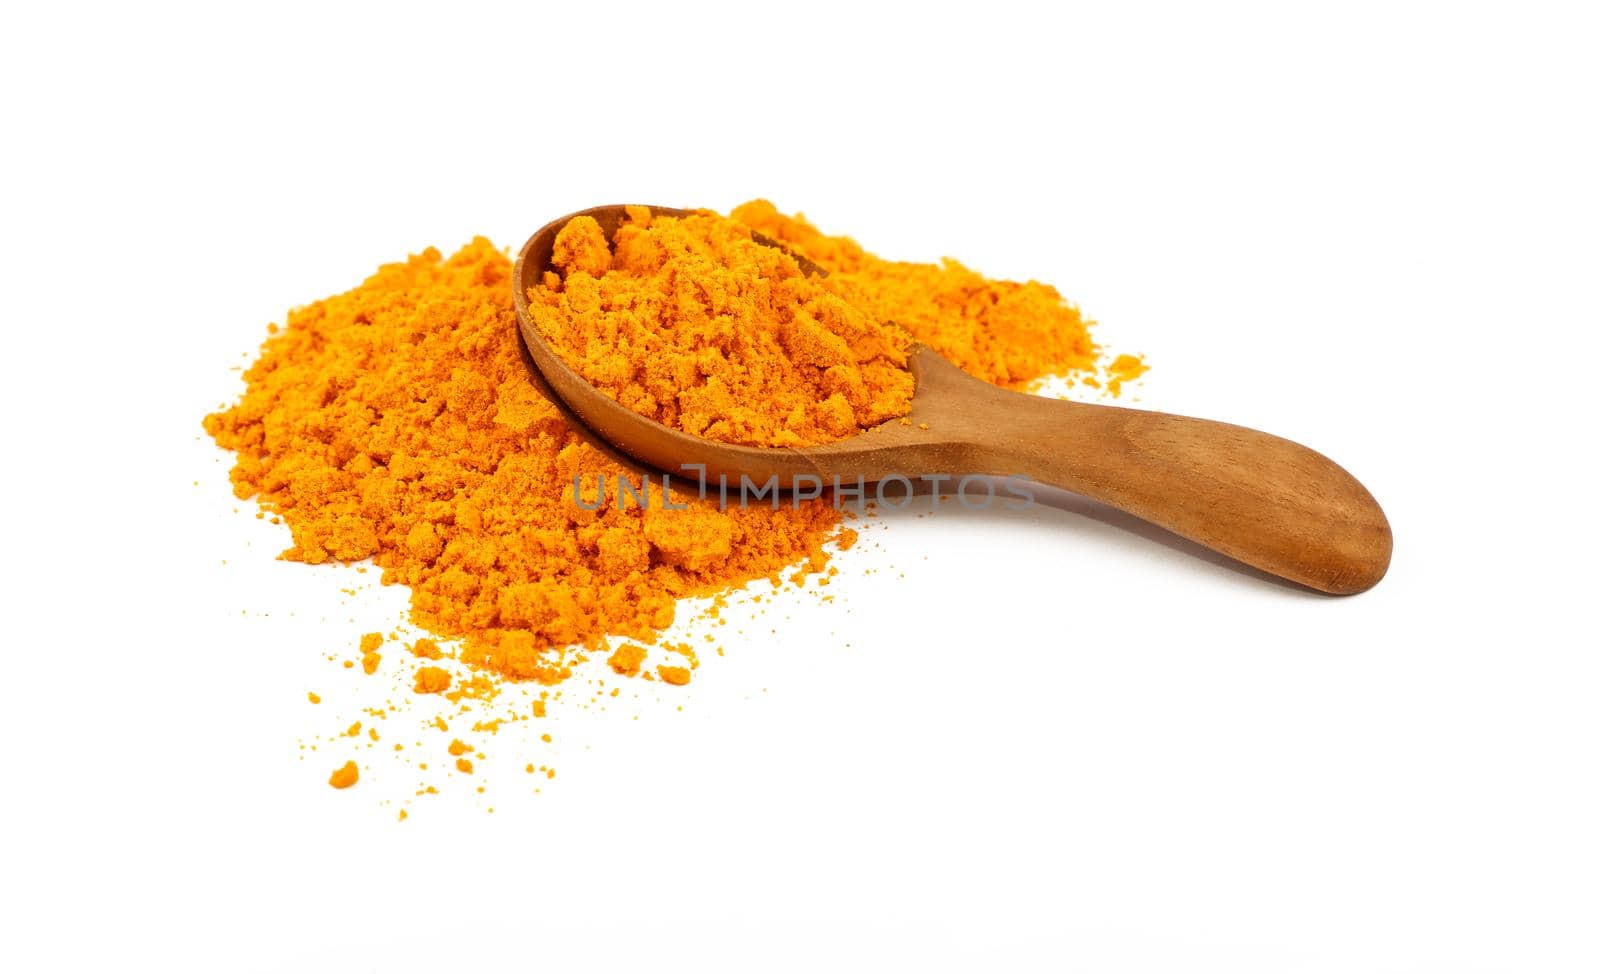 Wooden scoop spoon full of yellow turmeric powder by BreakingTheWalls